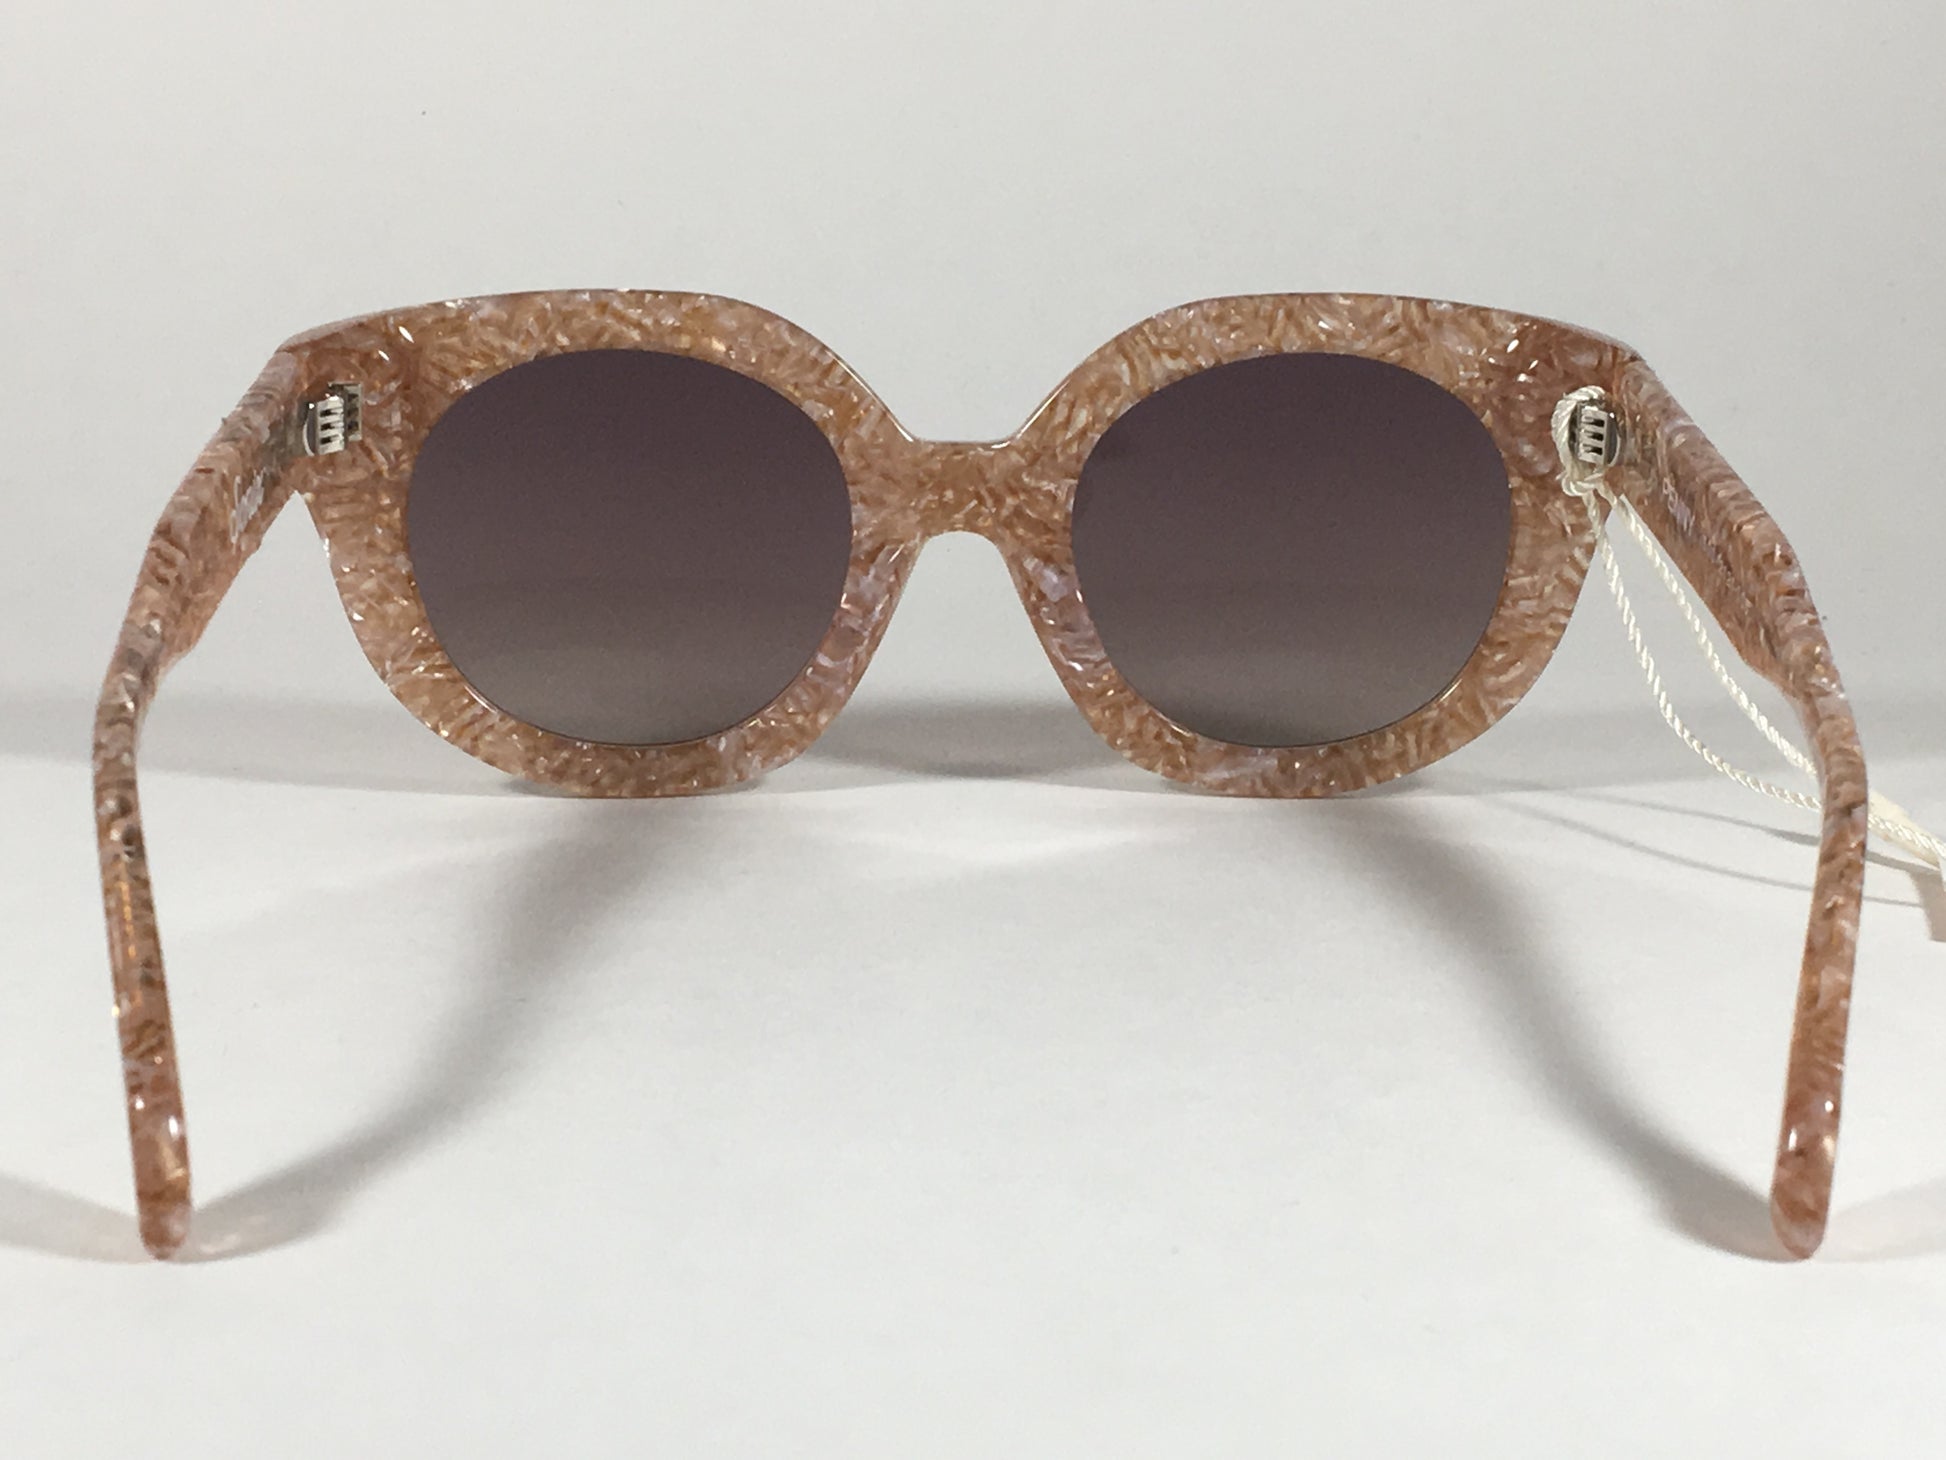 Sonix Penny 500-2121-005 Sunglasses Cat Eye Pink Candy Frame Smoke Gray Gradient Lens - Sunglasses